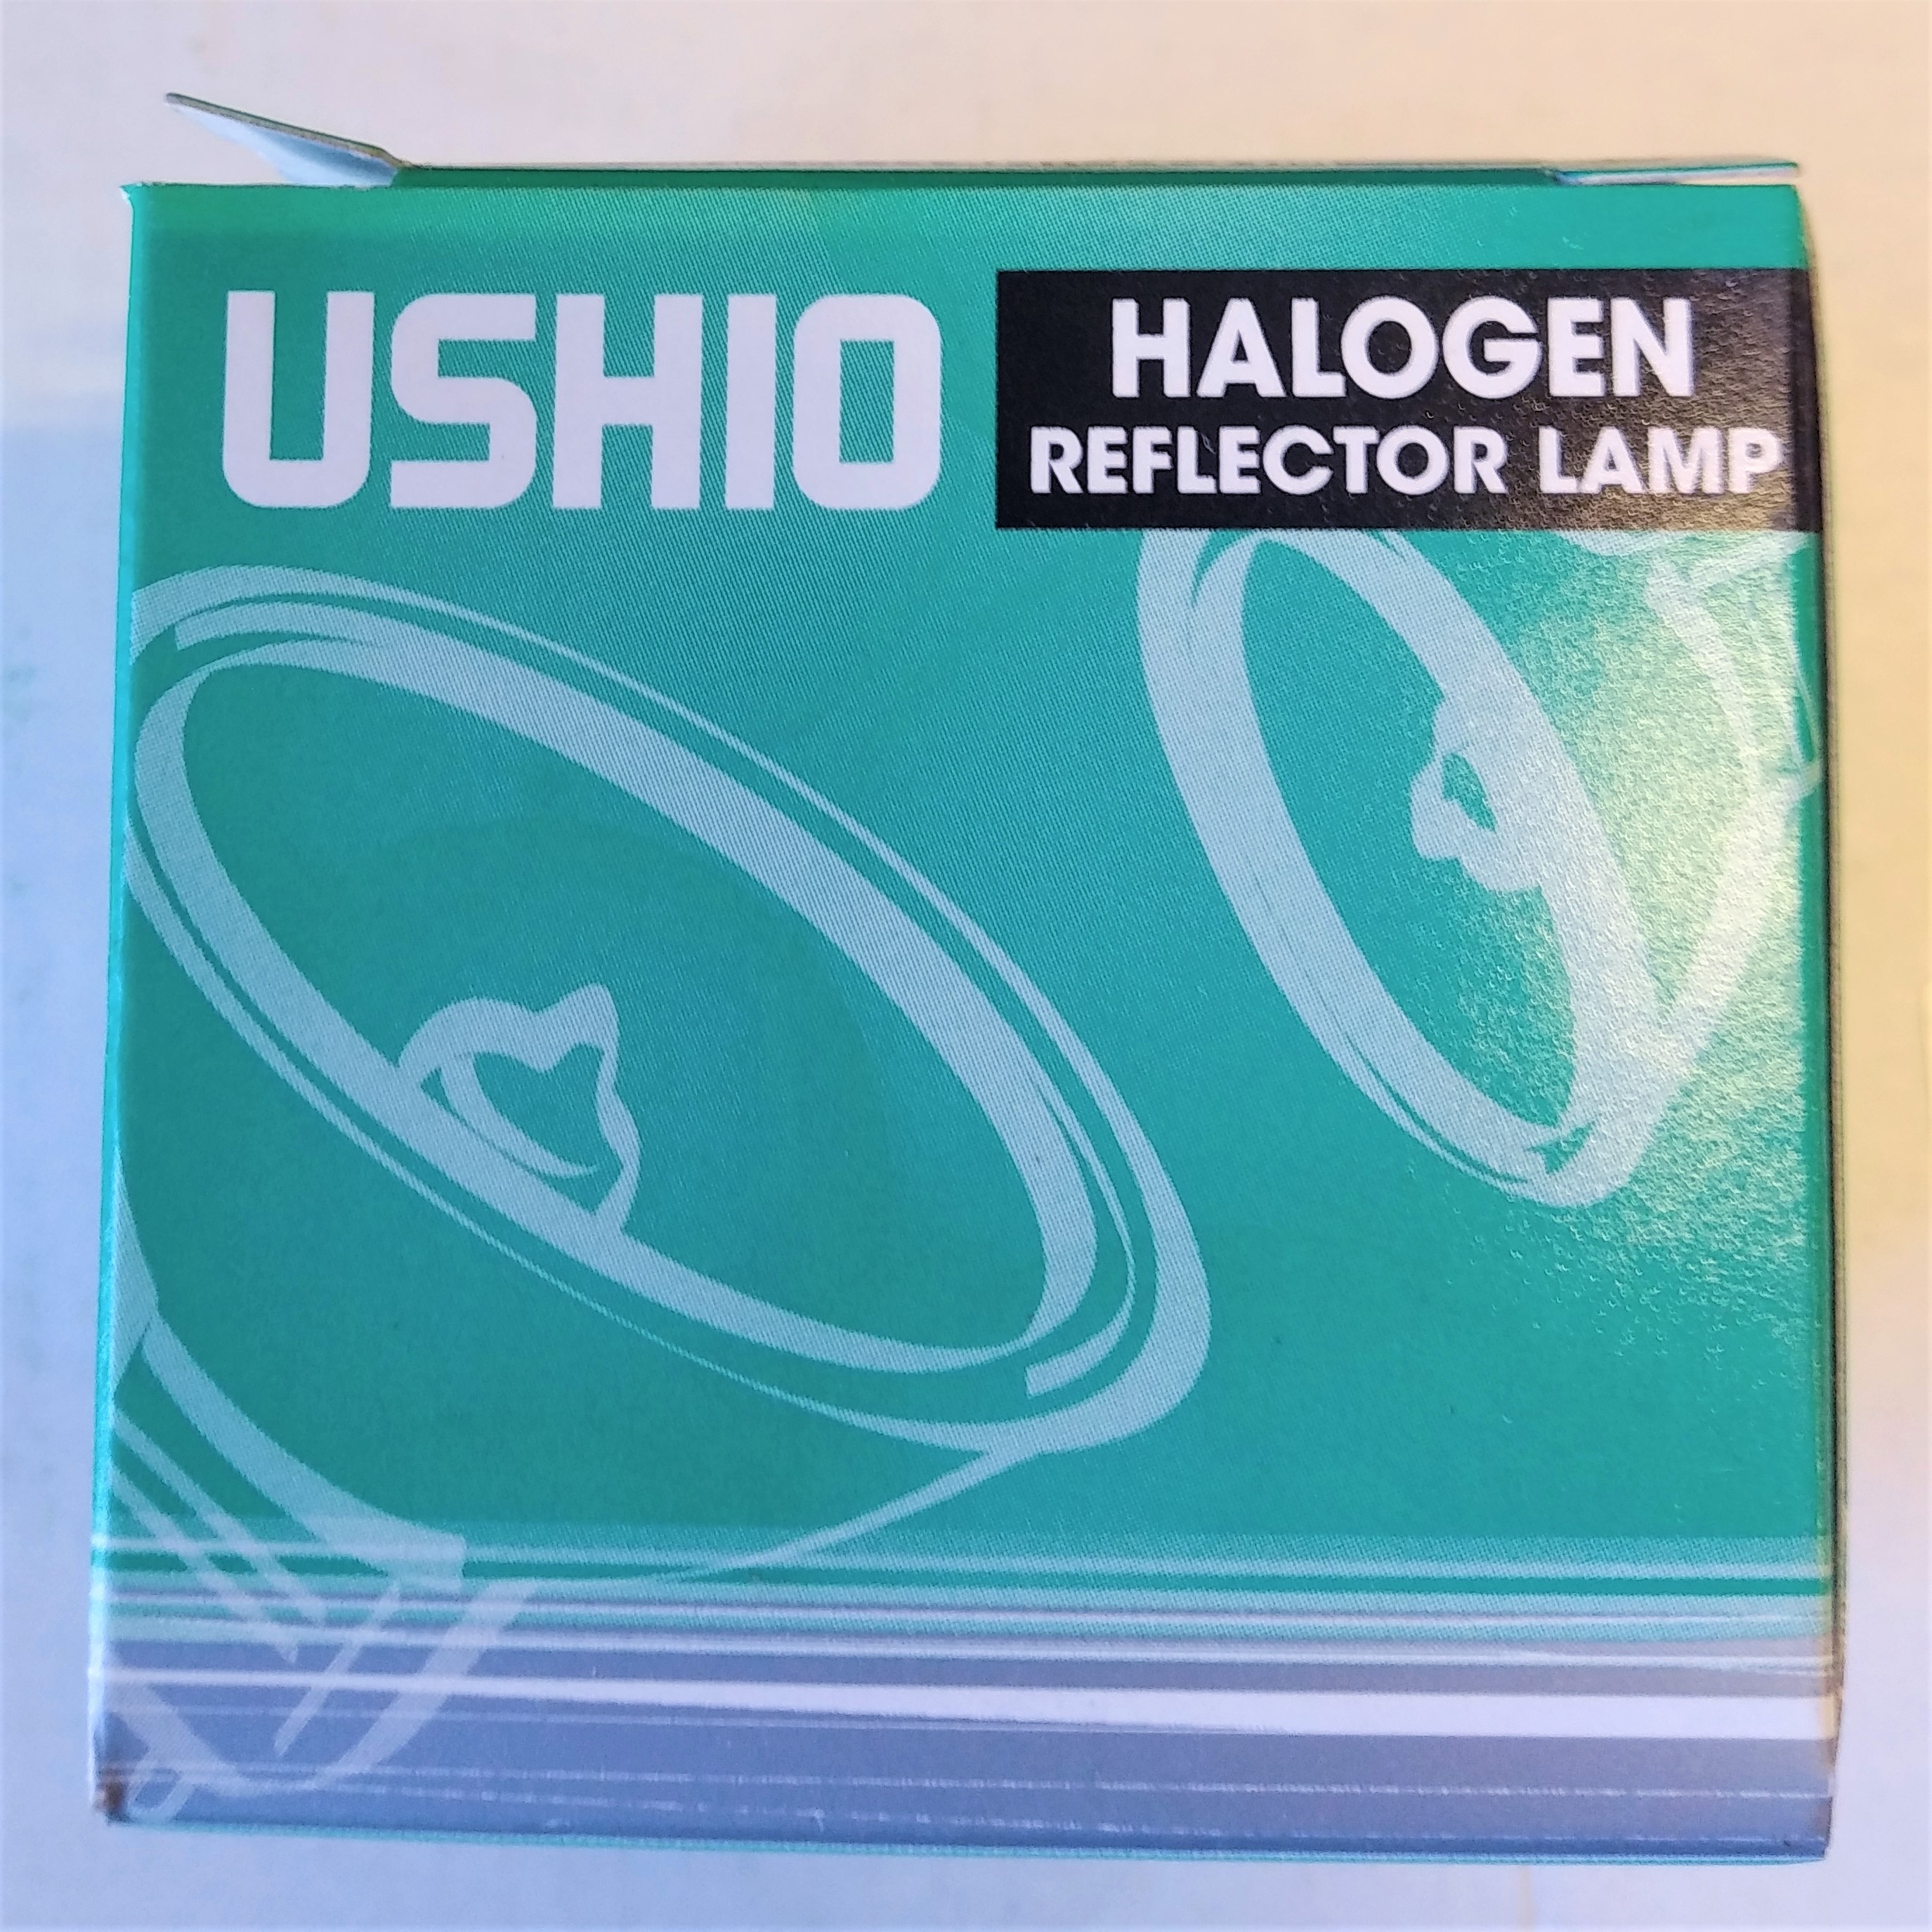 USHIO Halogen Reflector Lamp DDL 20V150W-3